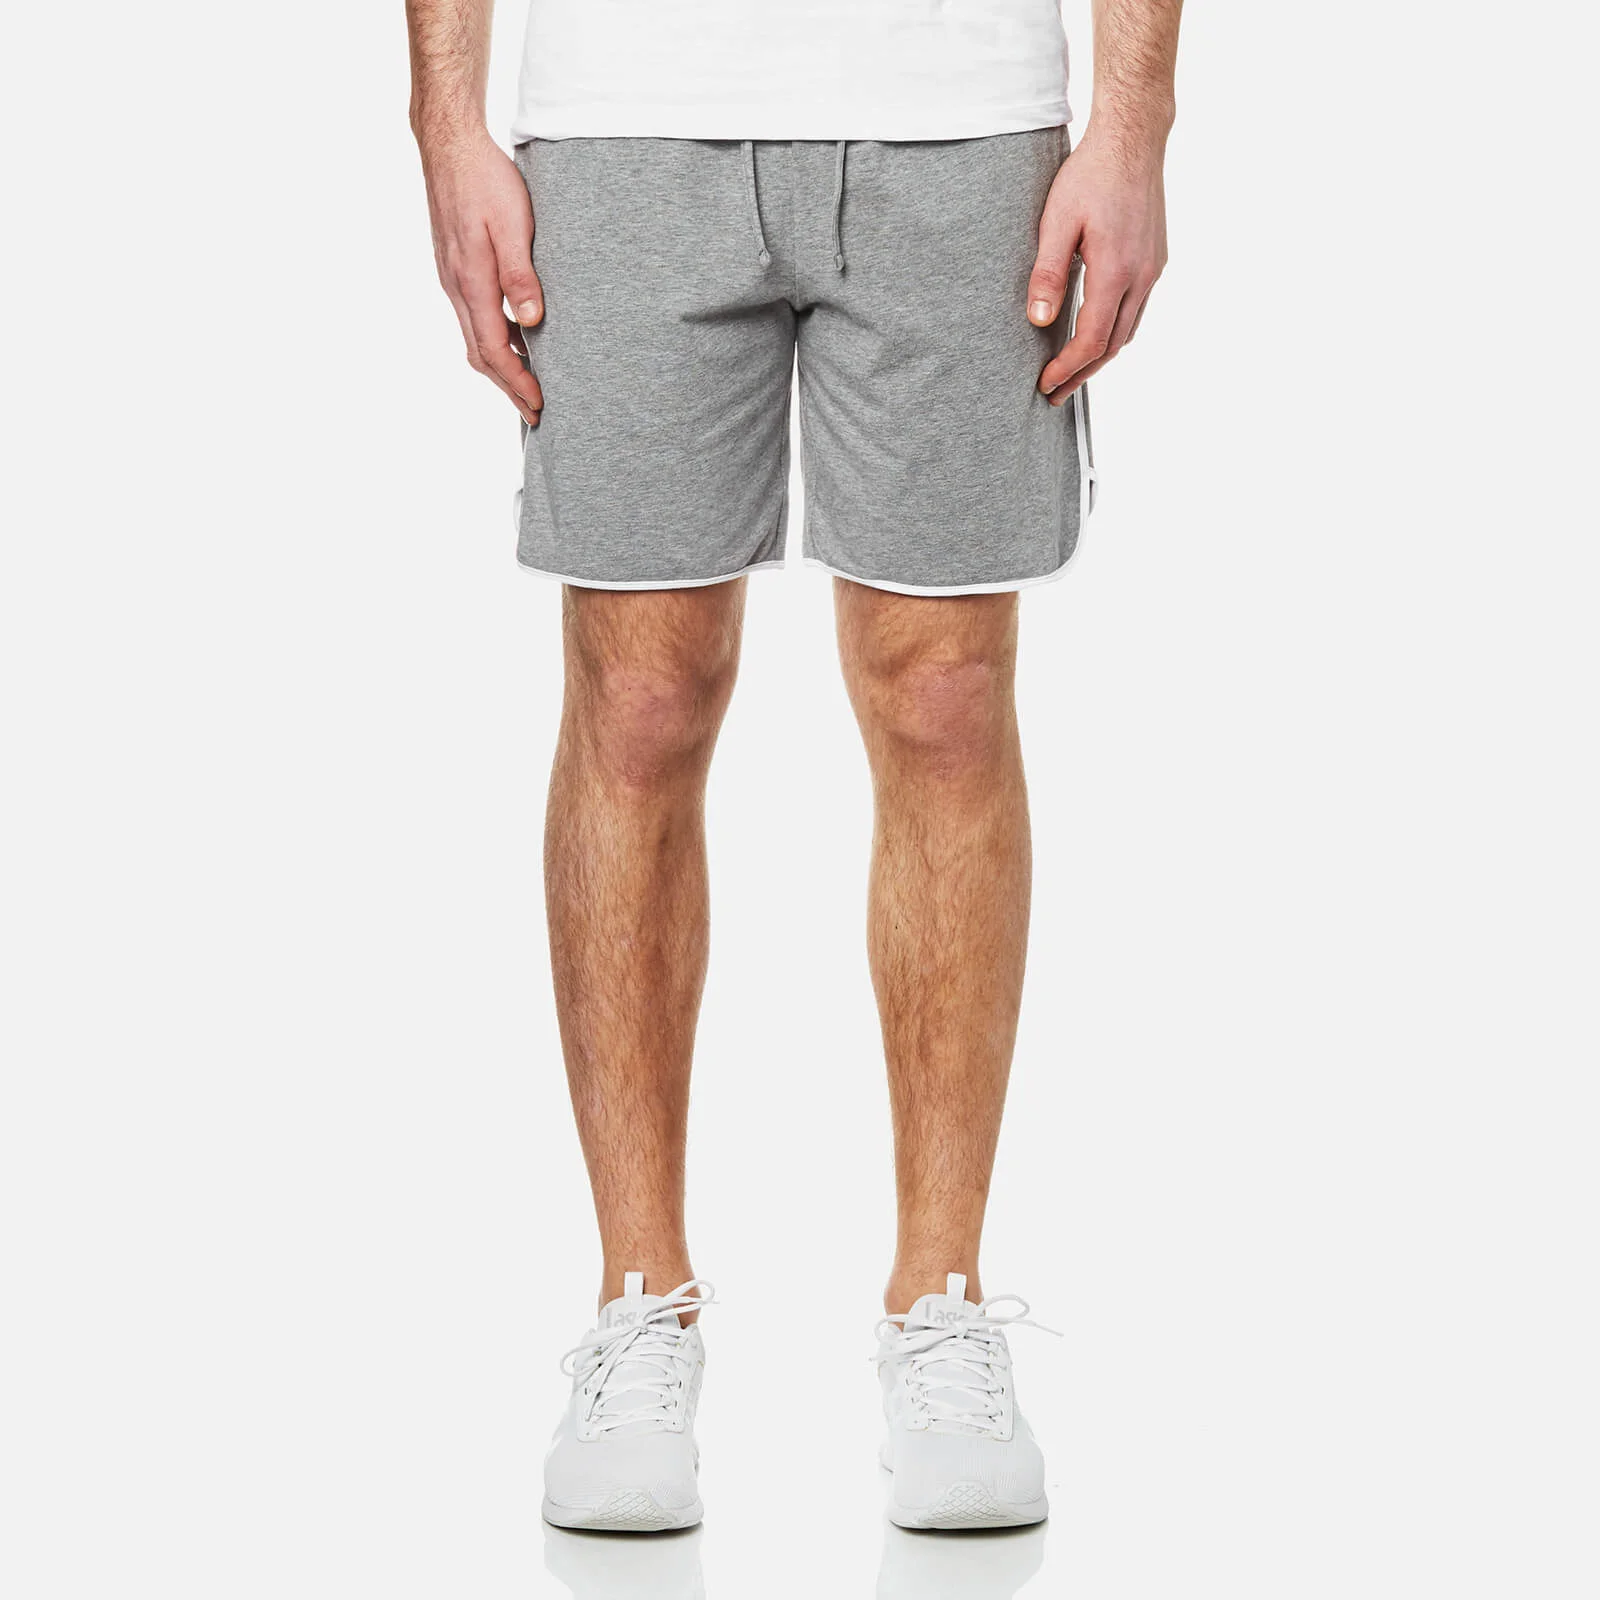 BOSS Hugo Boss Men's Shorts - Medium Grey Image 1